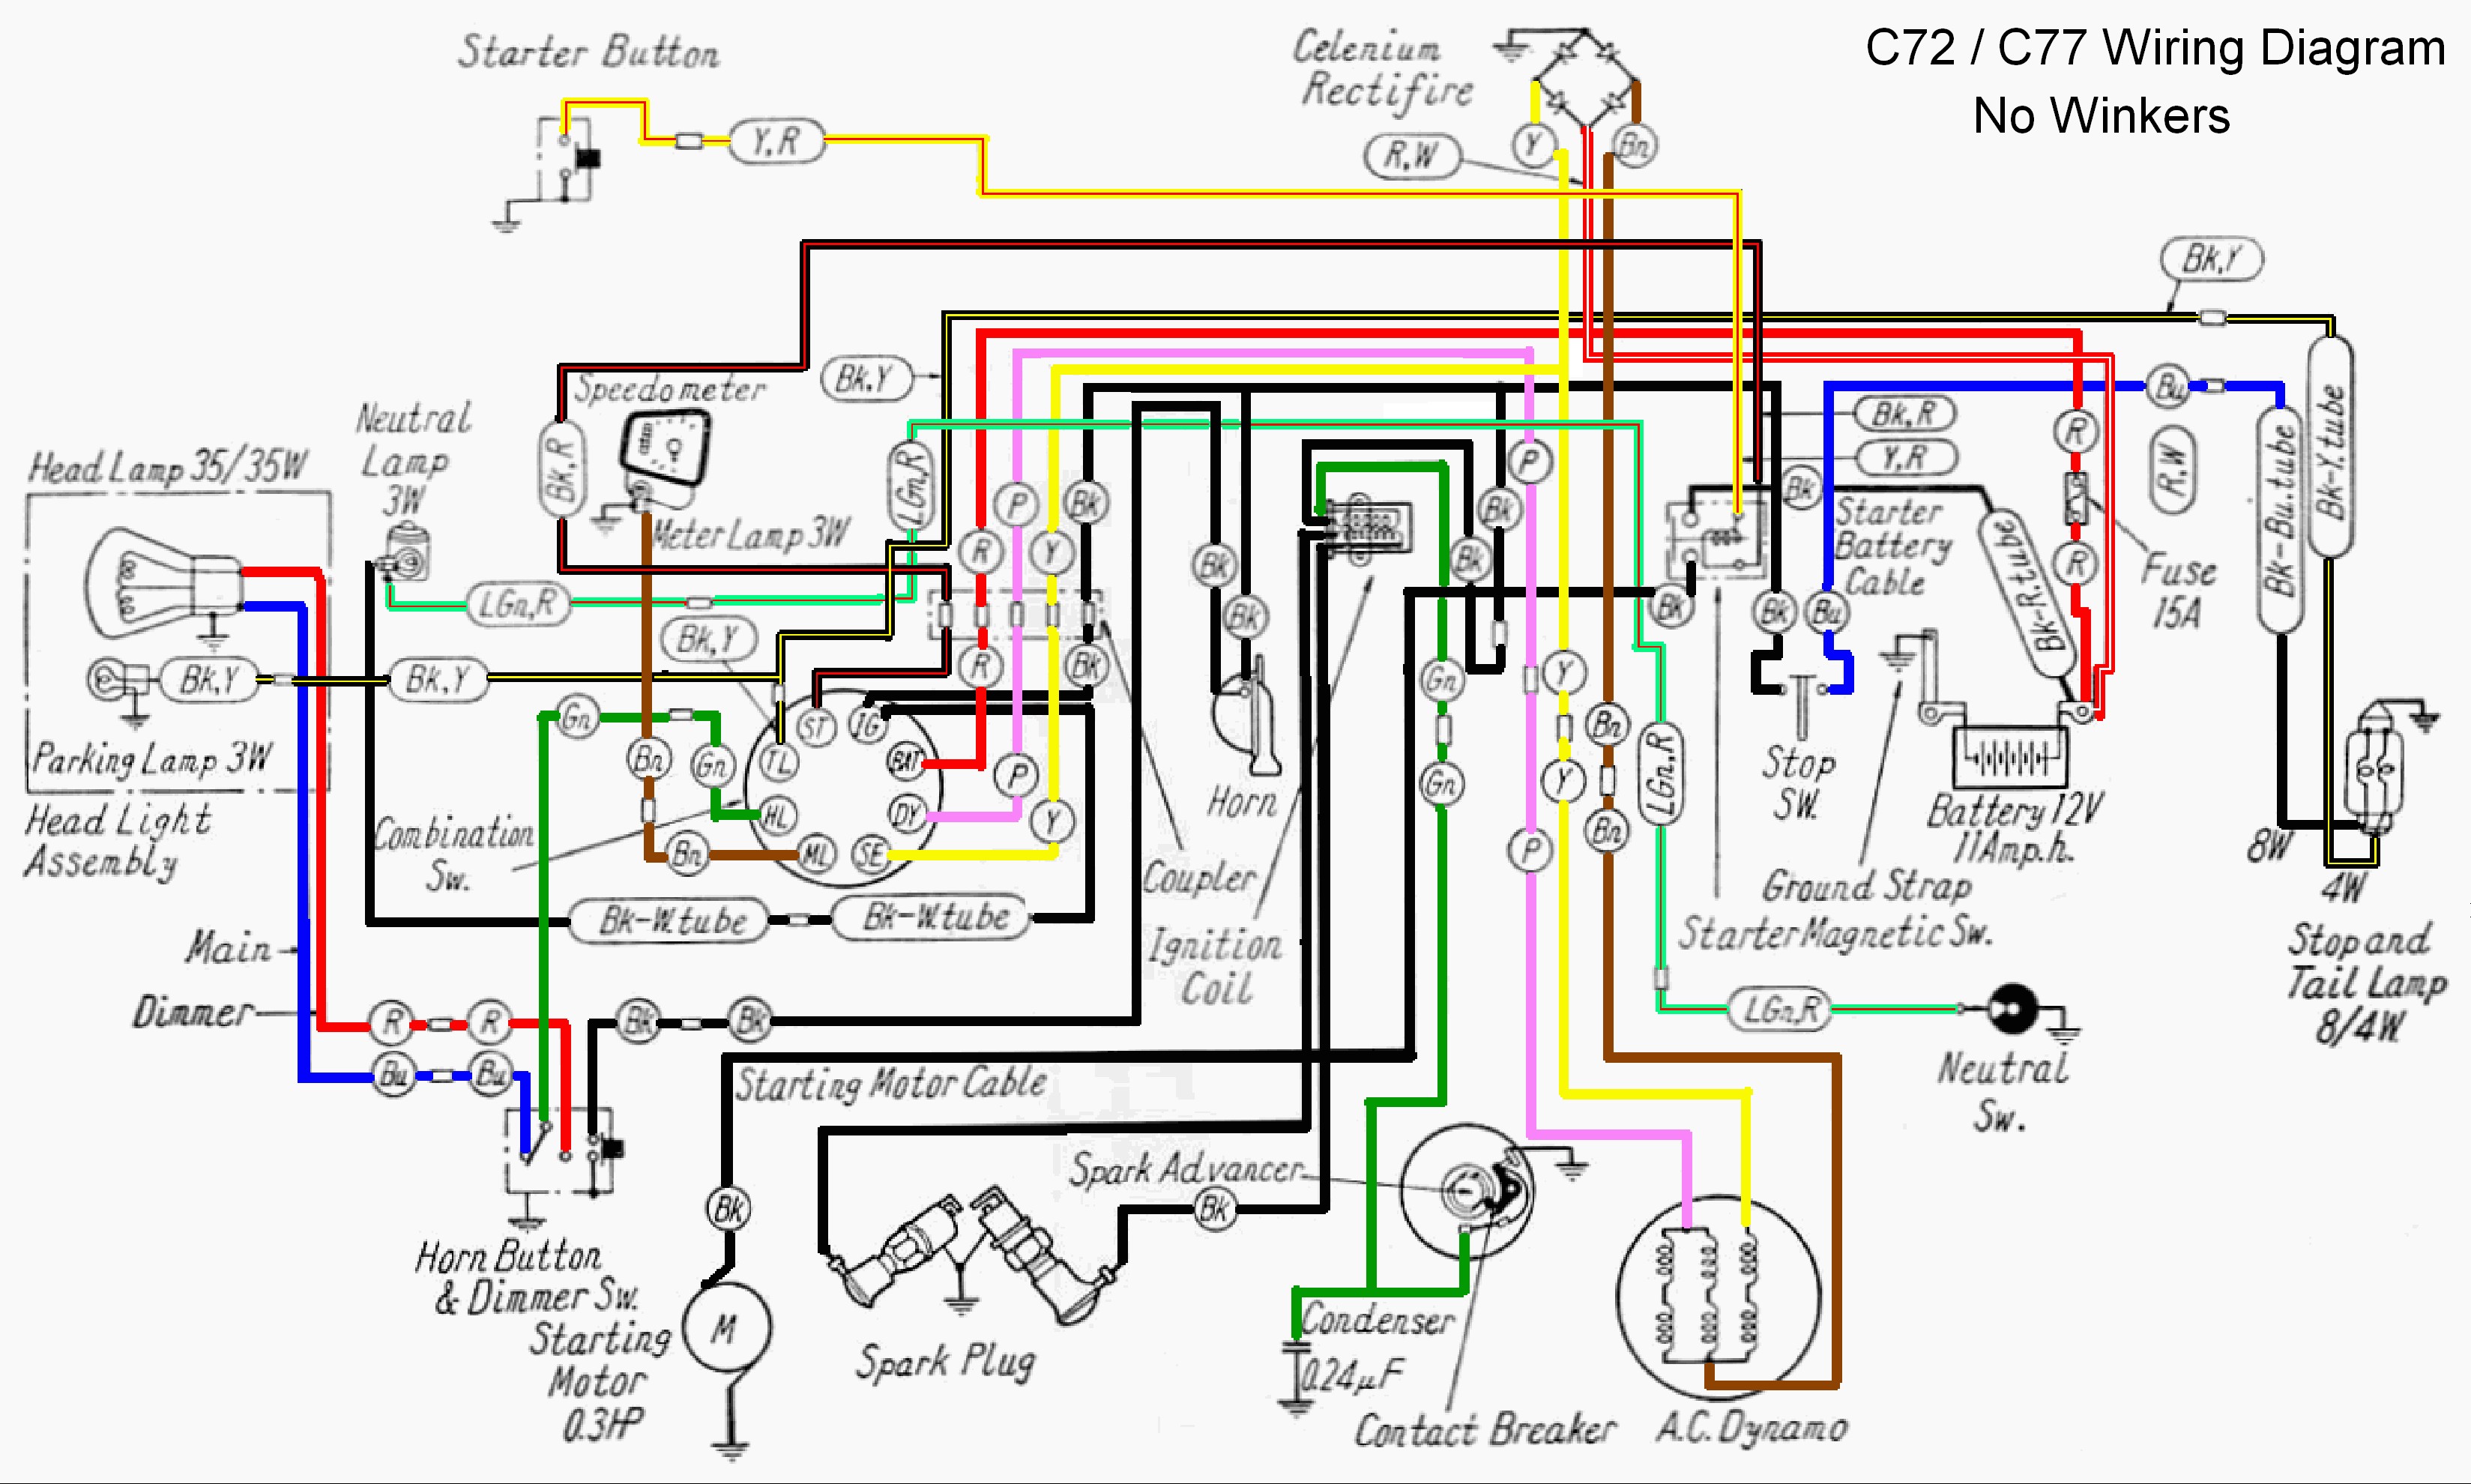 Basic Motorcycle Wiring Diagram Schematic Diagram Honda Wiring Diagram Of Basic Motorcycle Wiring Diagram